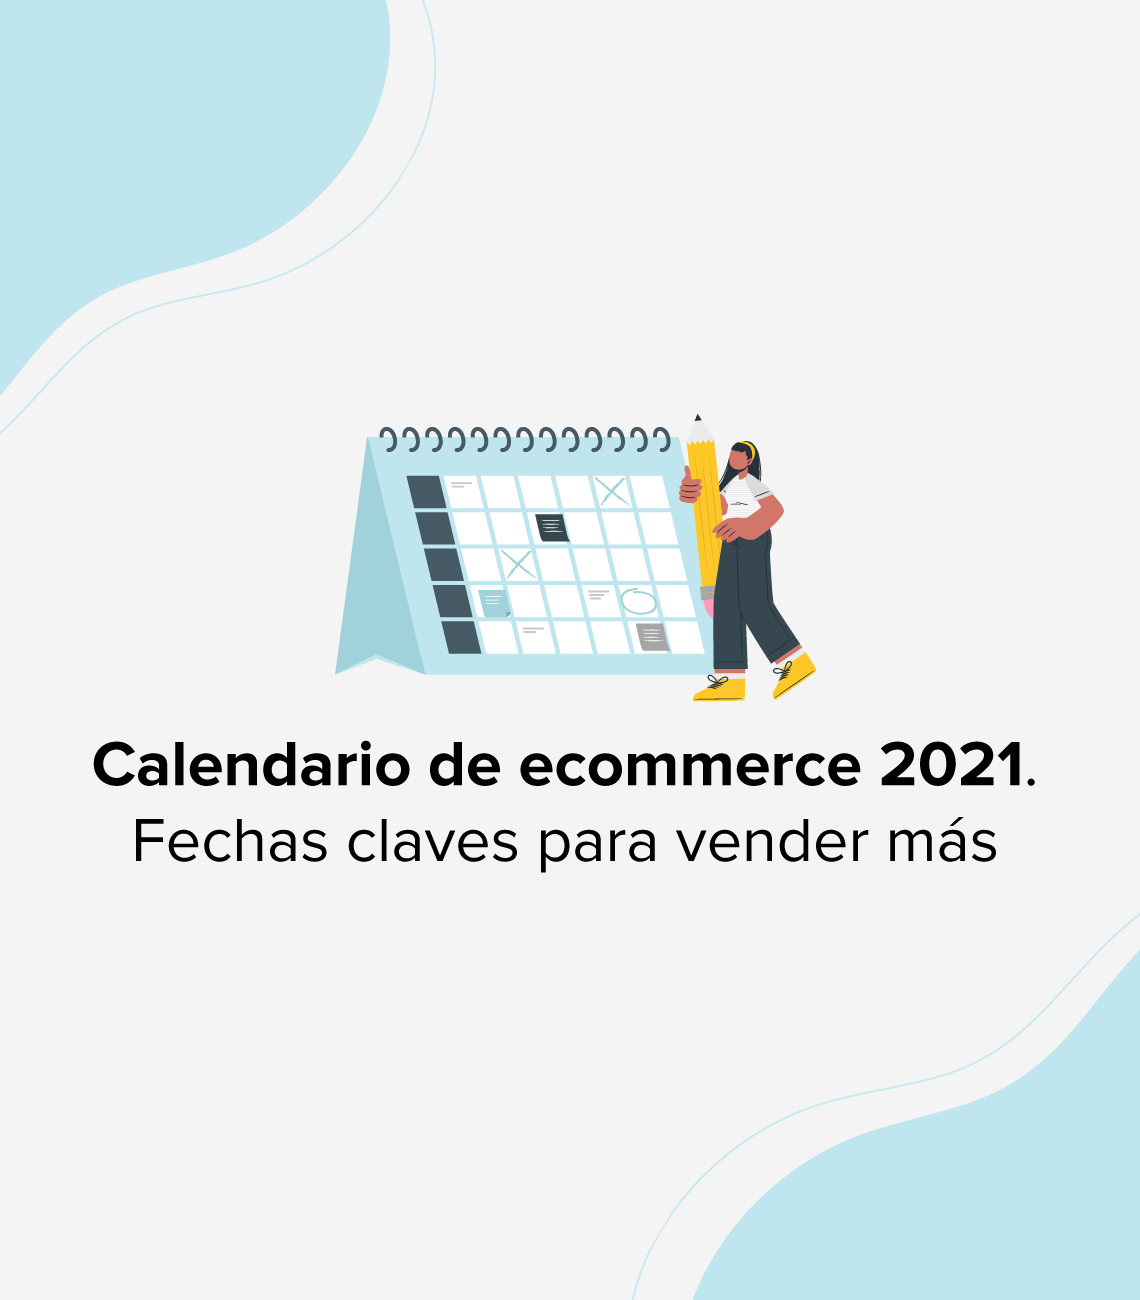 Calendario de ecommerce 2021